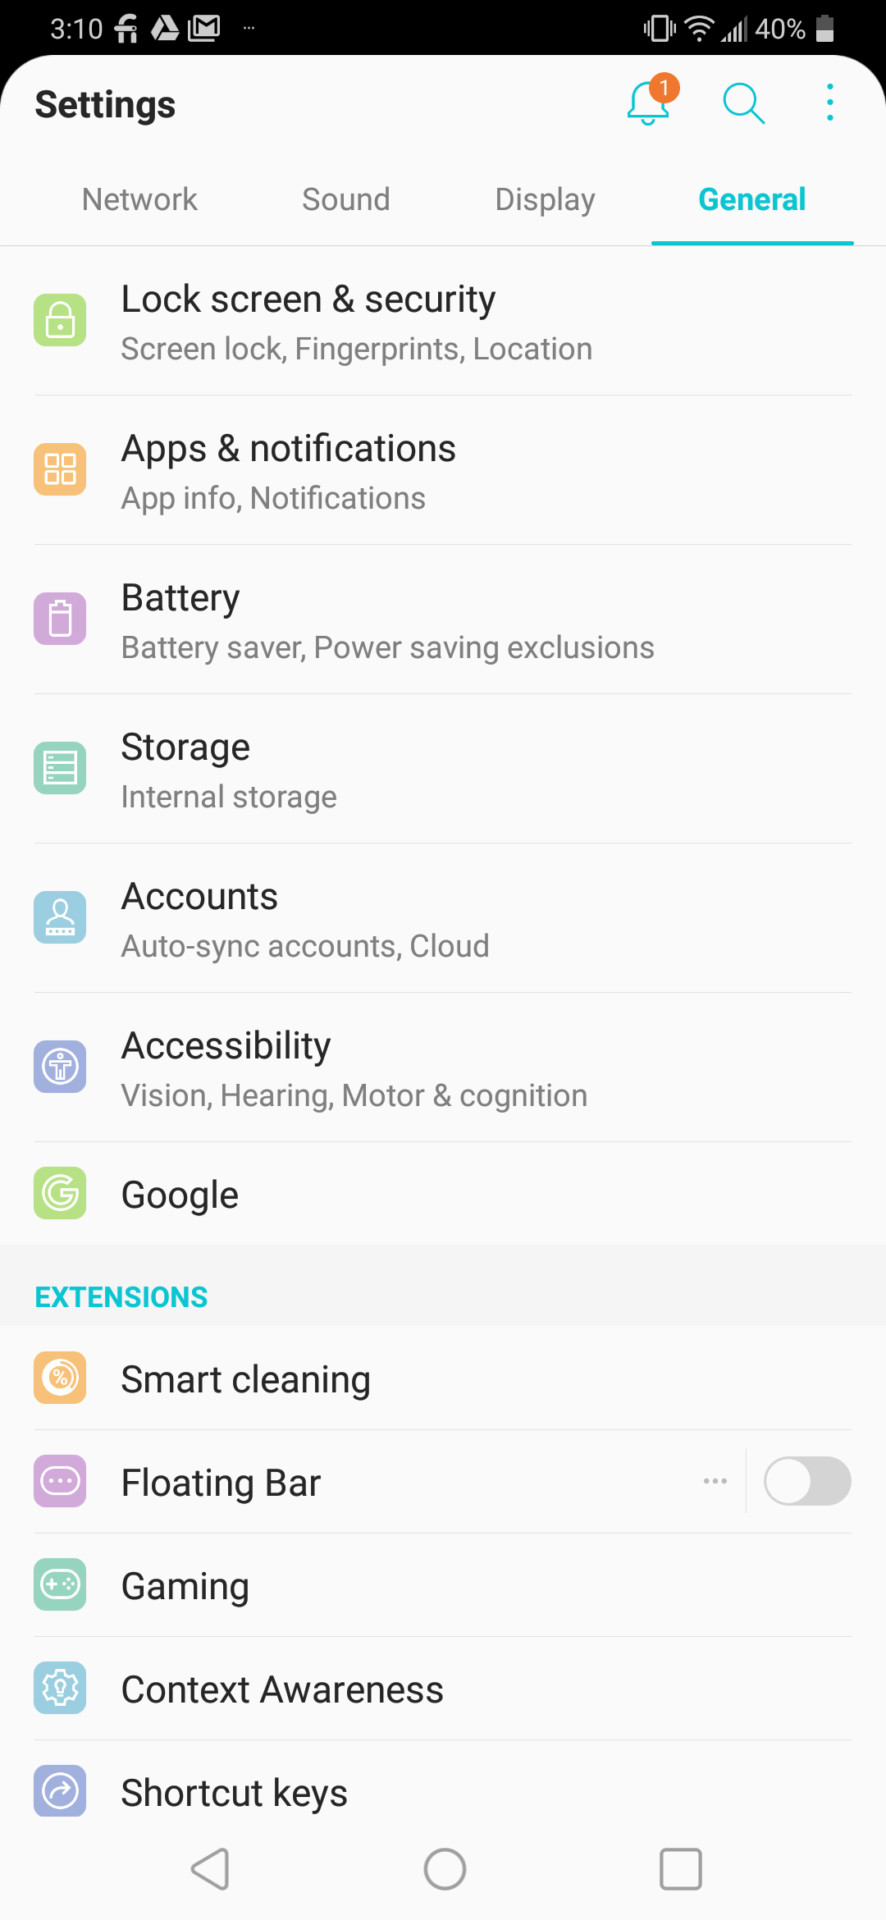 LG V40 settings menu